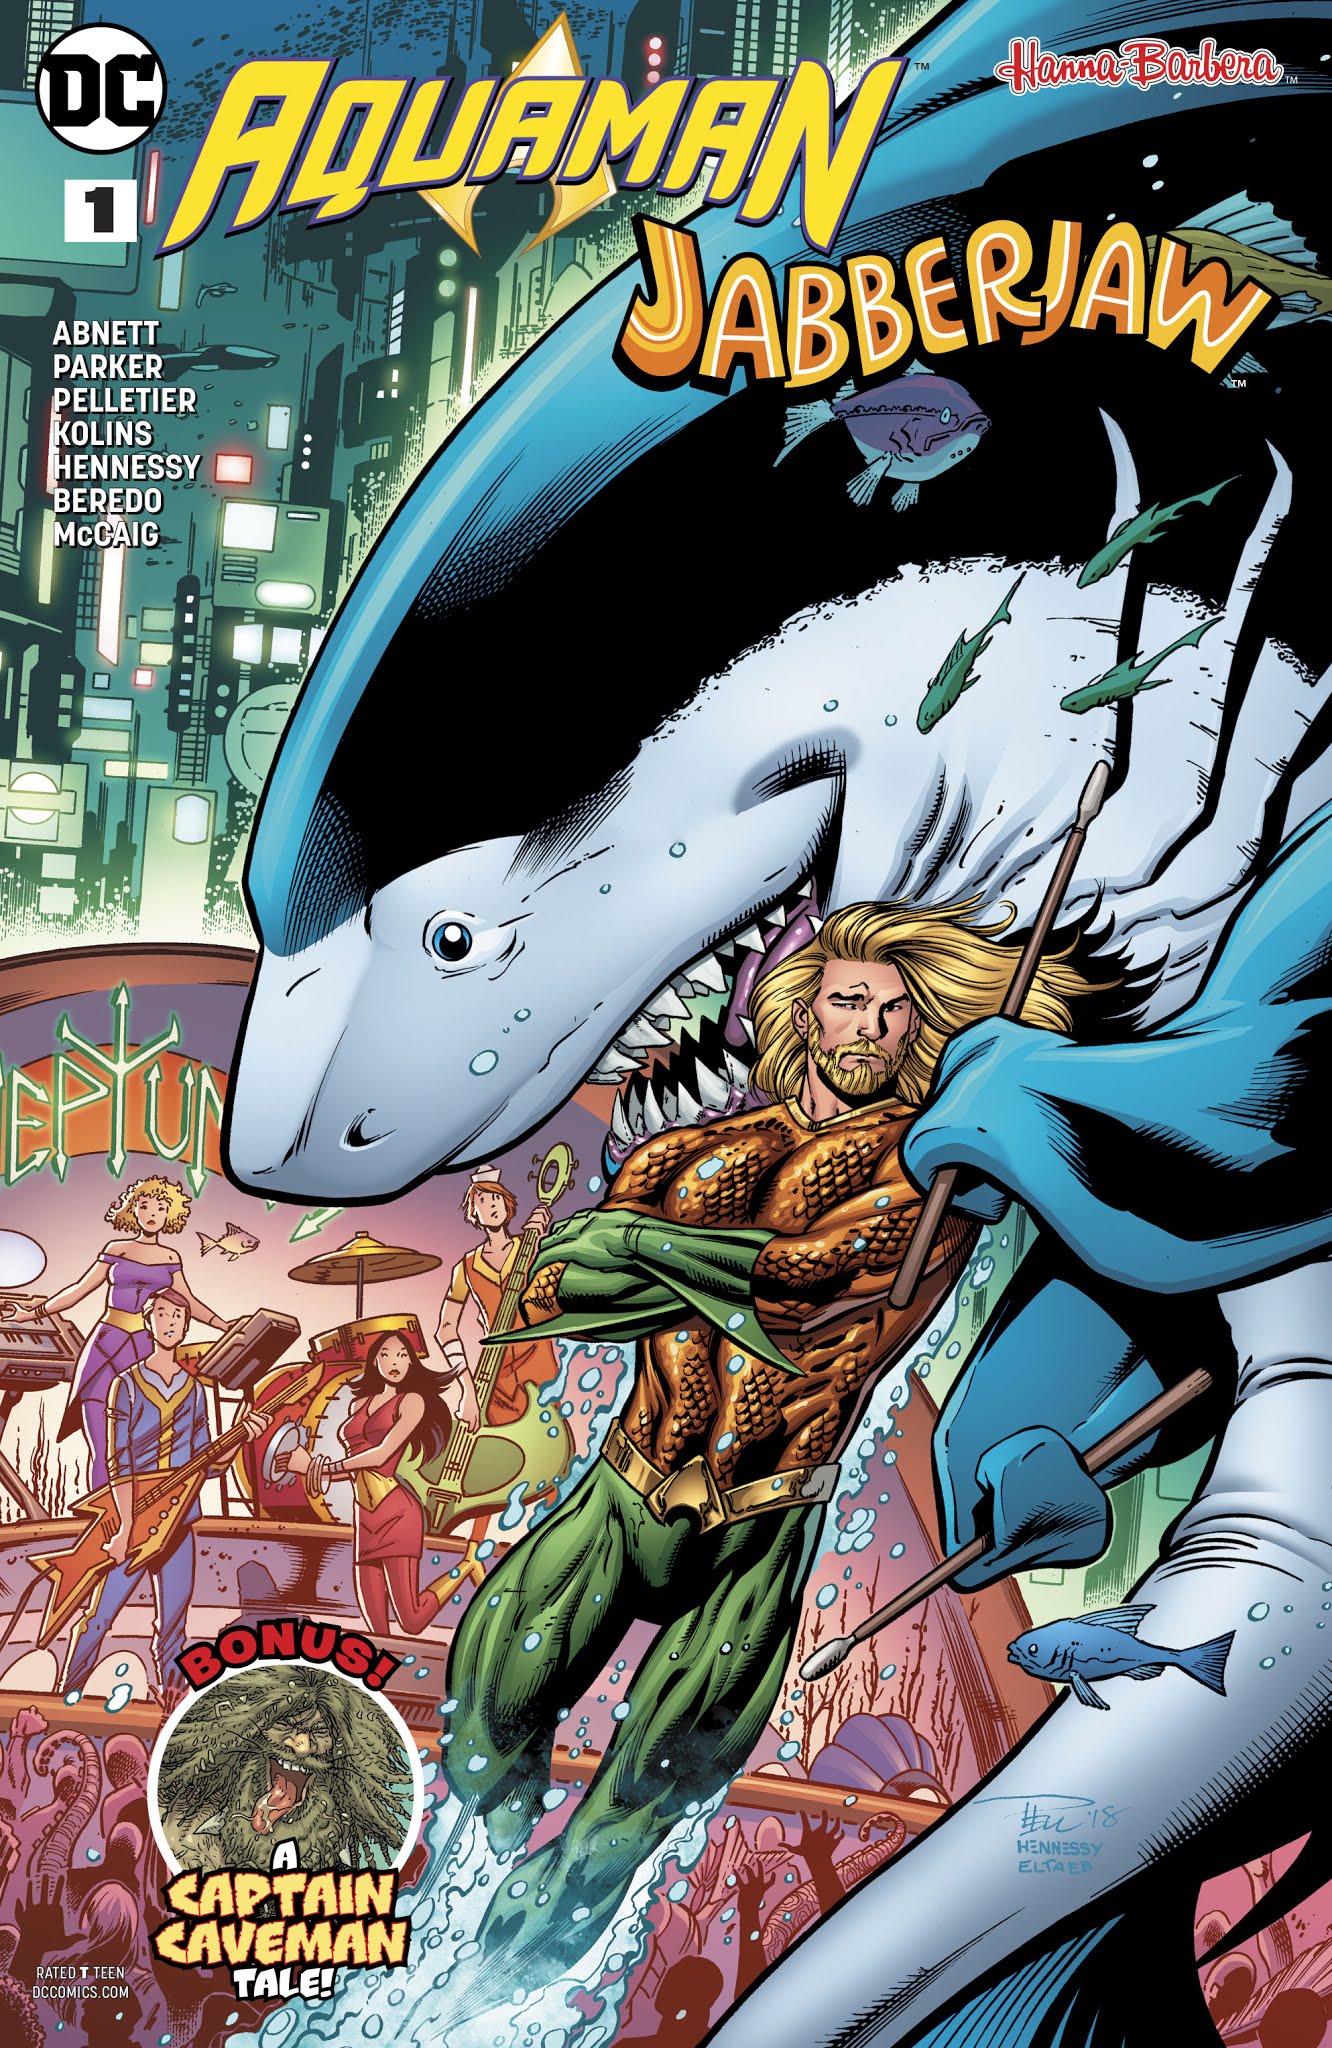 Read online Aquaman/Jabberjaw Special comic -  Issue # Full - 1